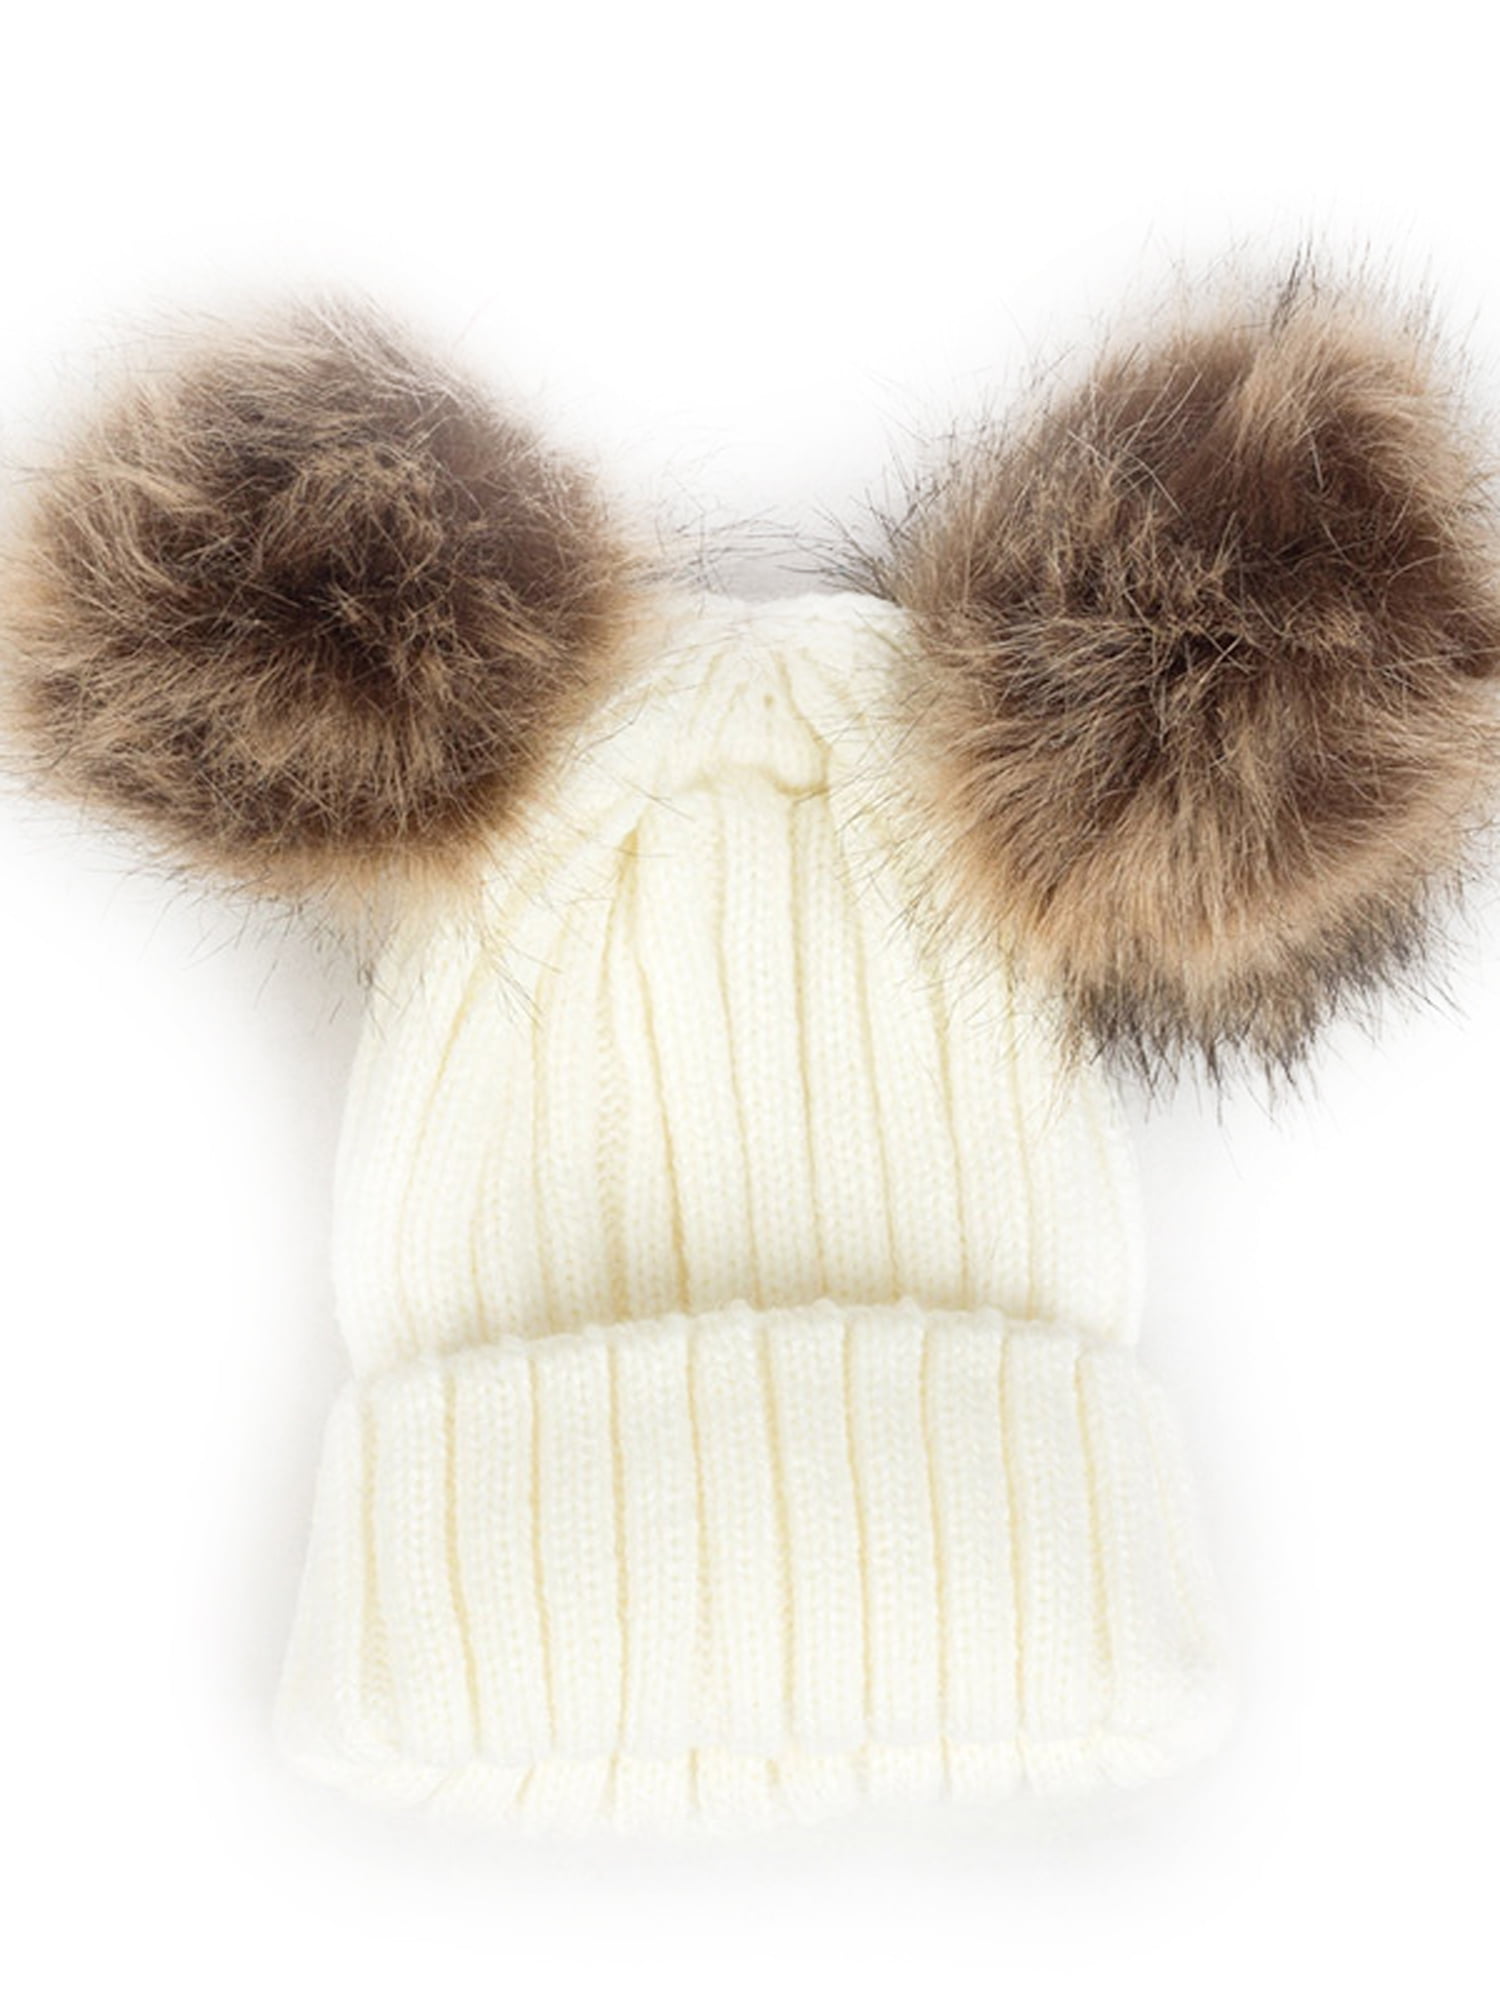 Warm Toddler Kid Girl&Boy Baby Infant Winter Crochet Knit Fur Pom Hat Beanie Cap